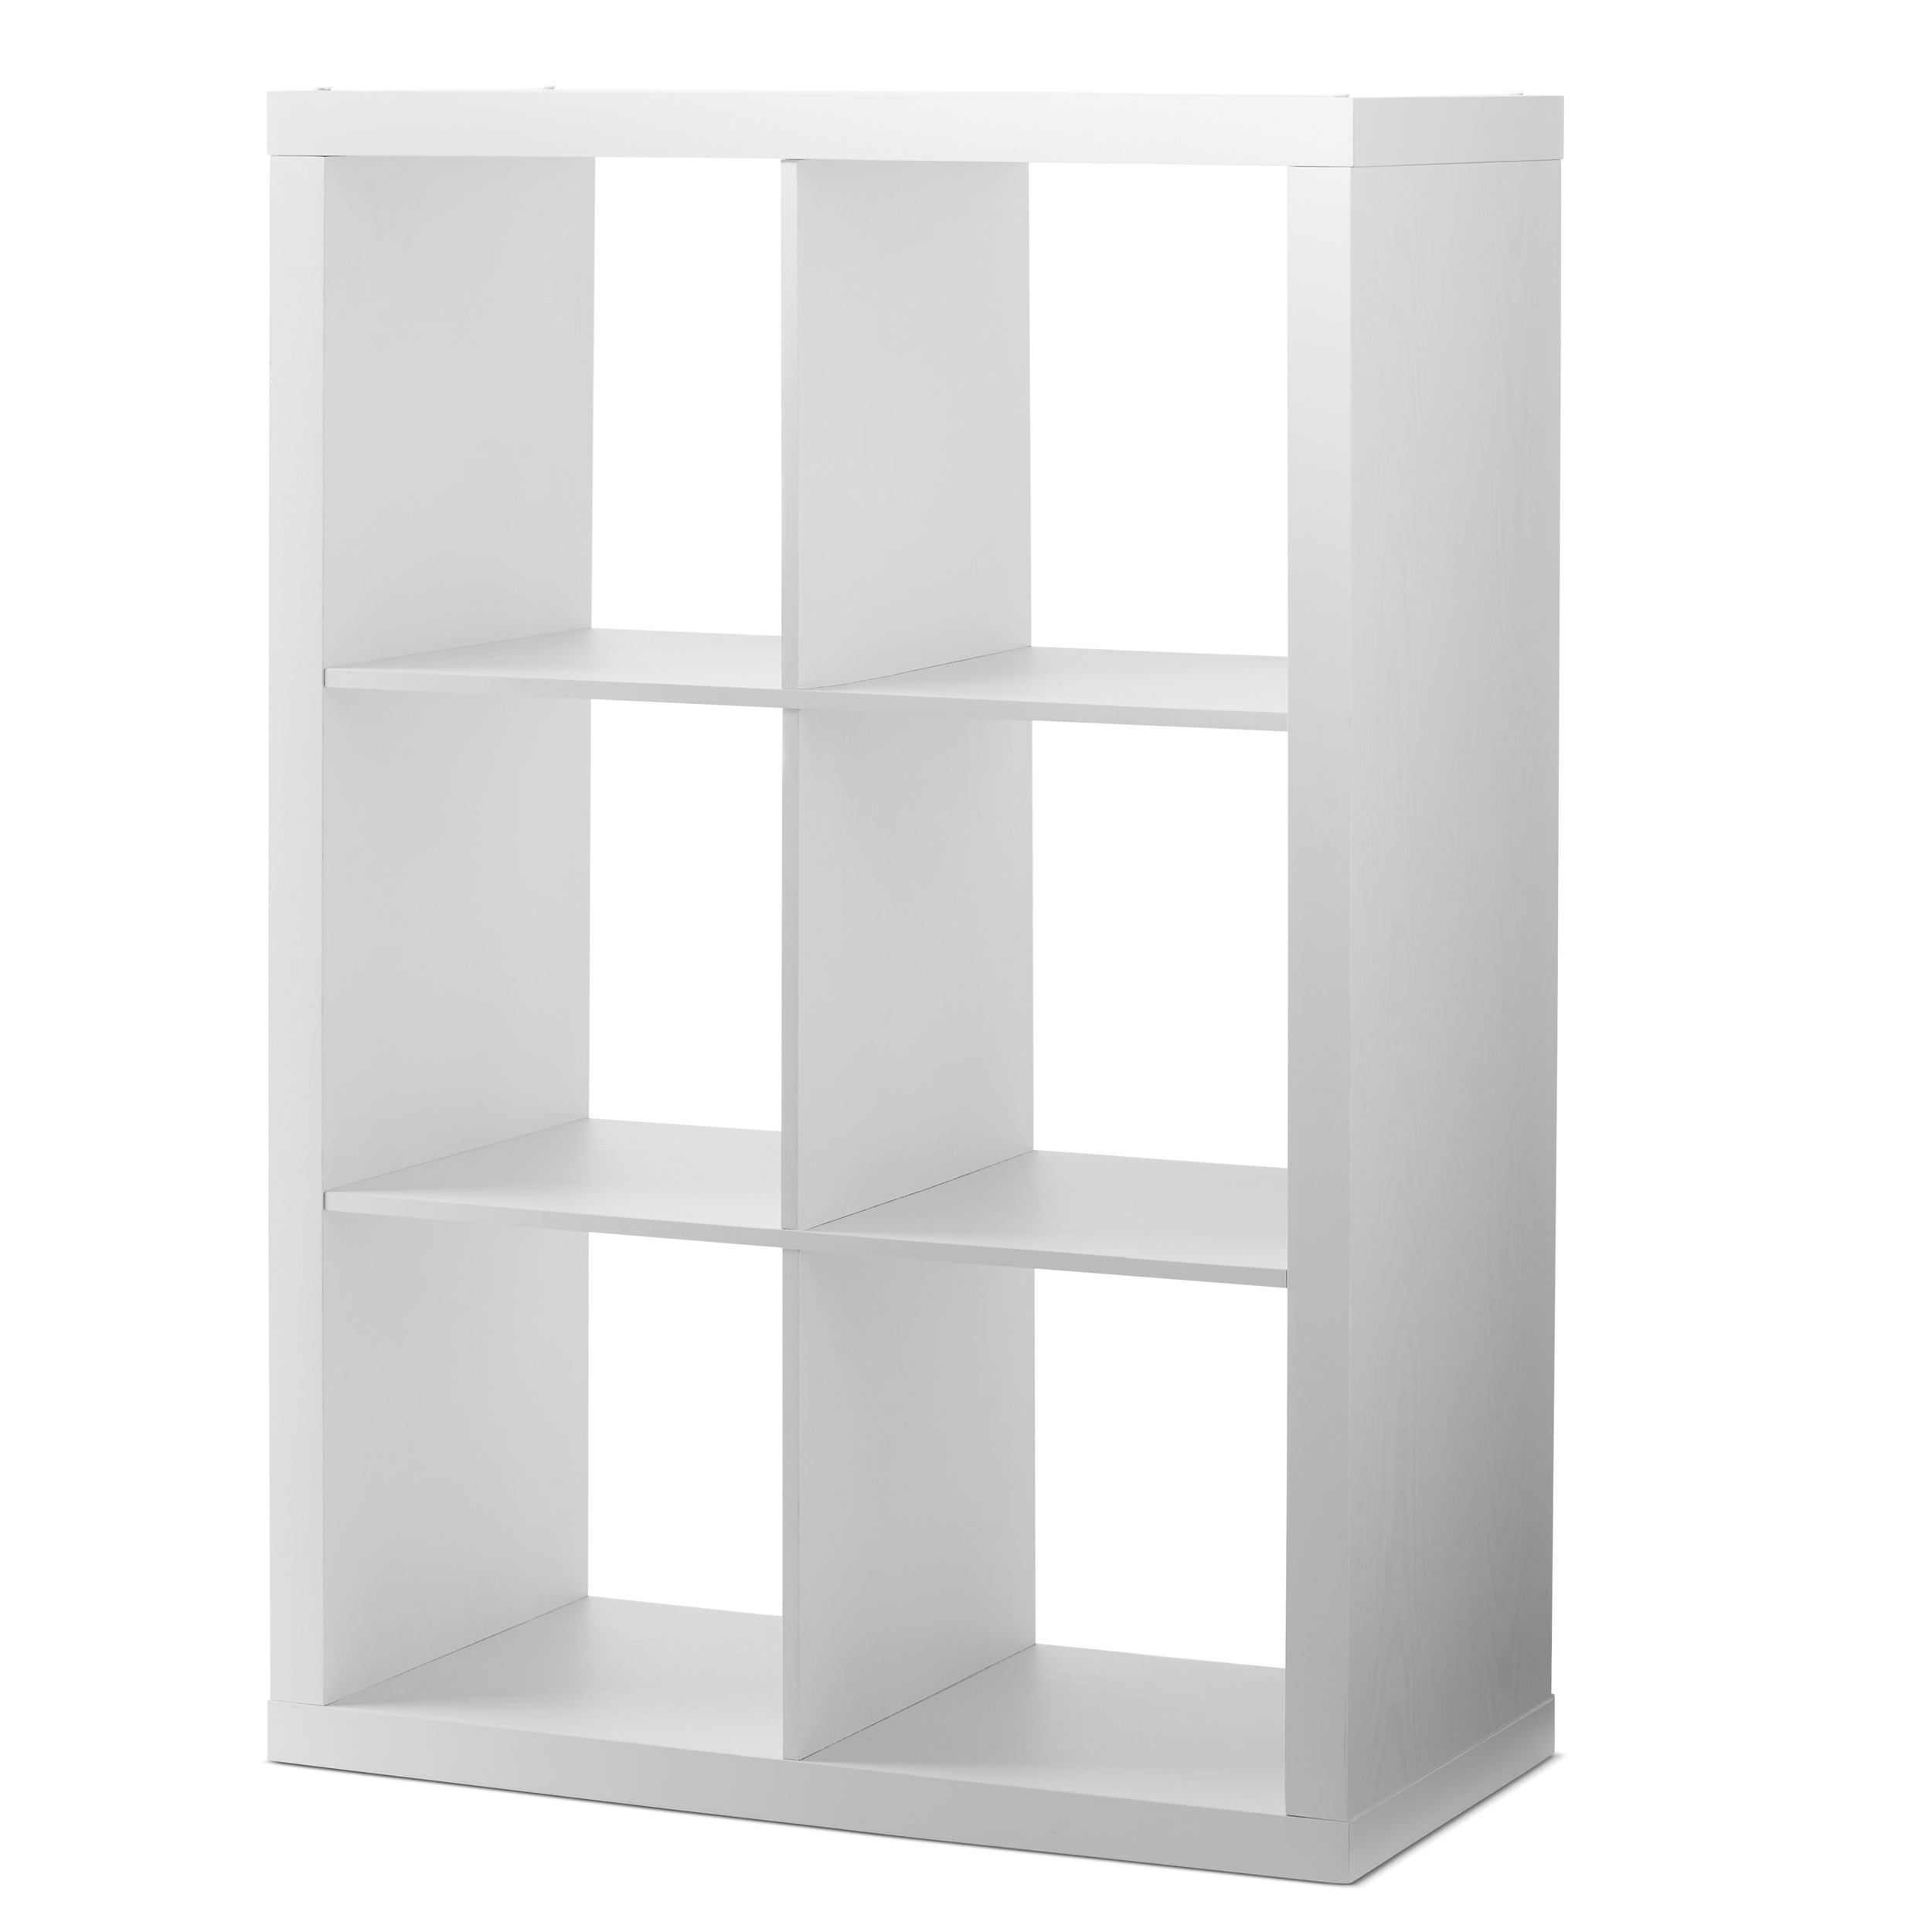 Better Homes & Gardens 6-Cube Storage Organizer, Textured White - image 2 of 8